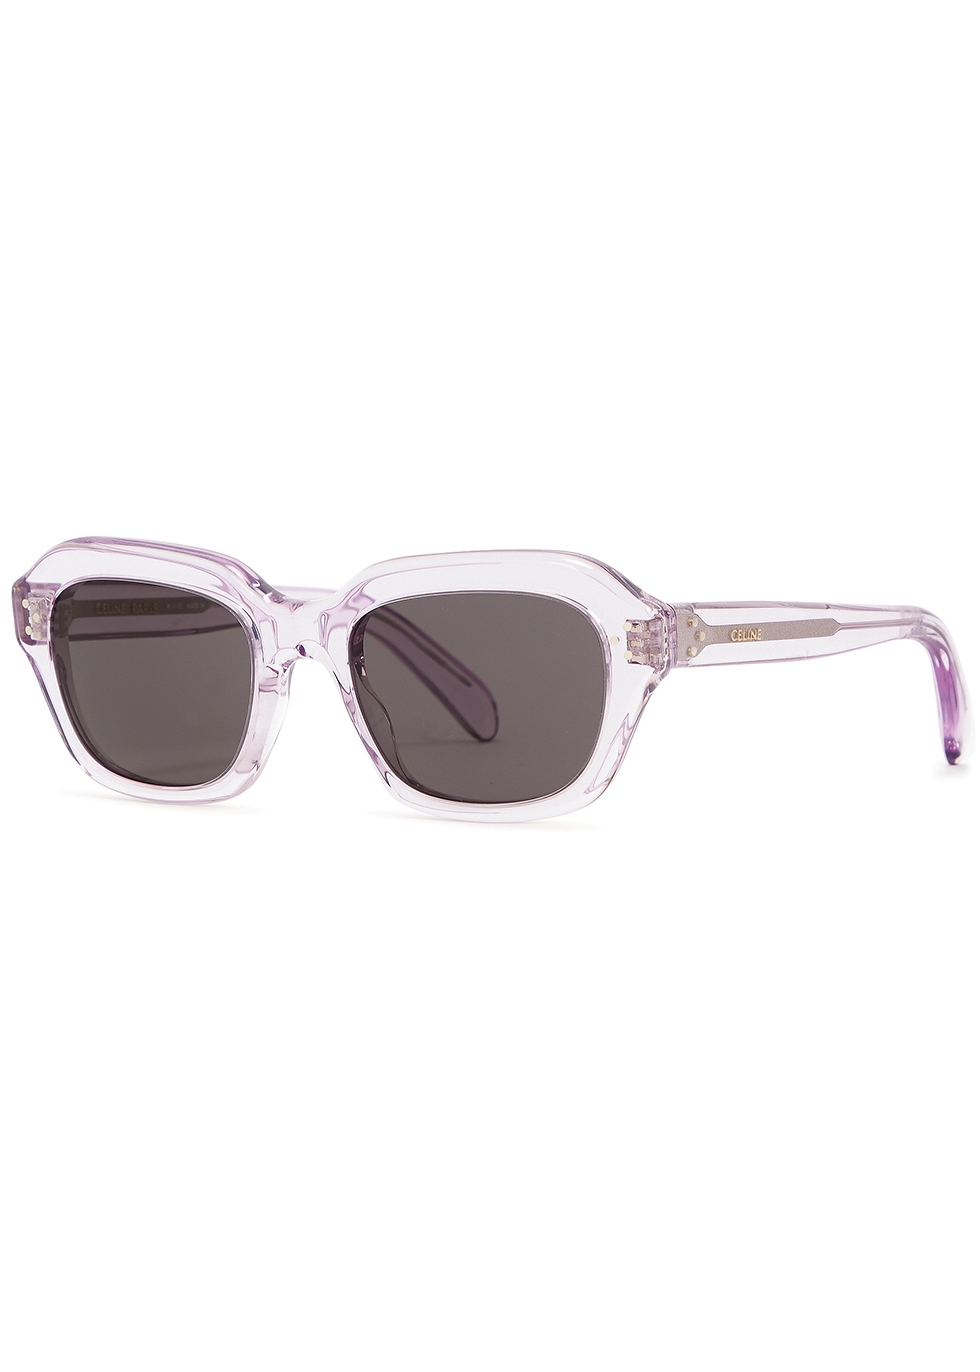 Celine Lilac rectangle-frame sunglasses - Harvey Nichols